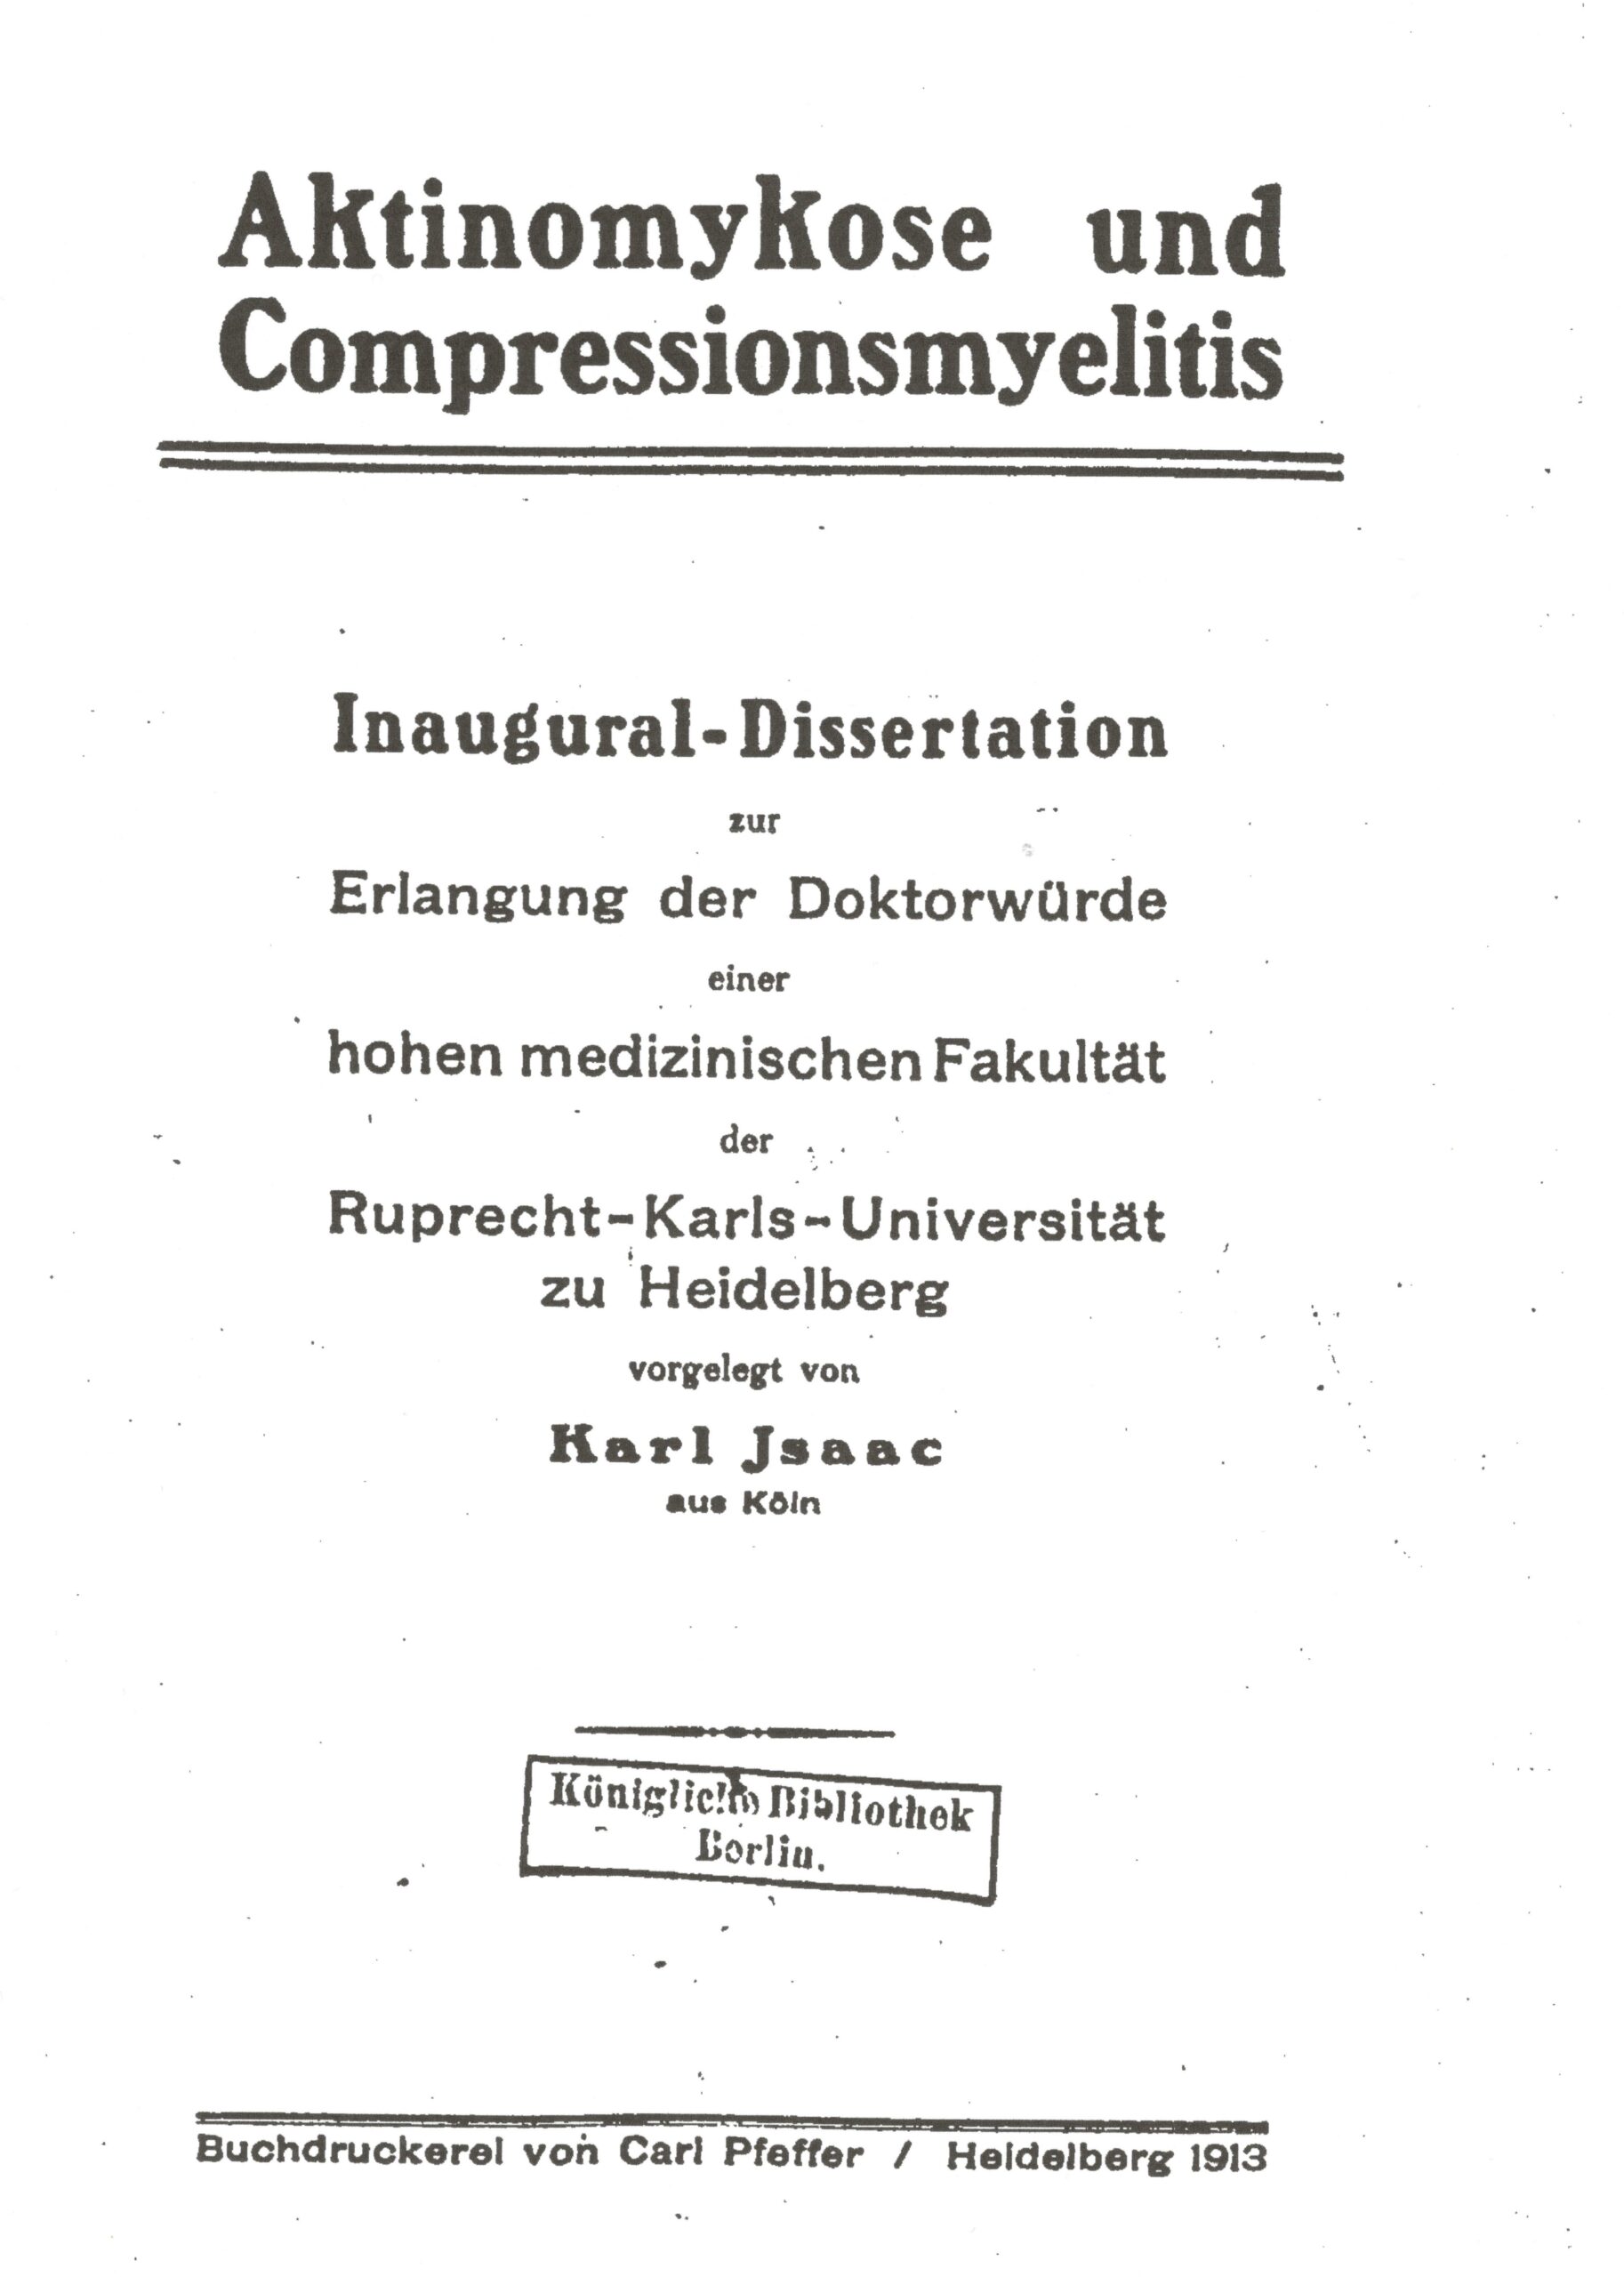 Dissertation, Heidelberg 1913